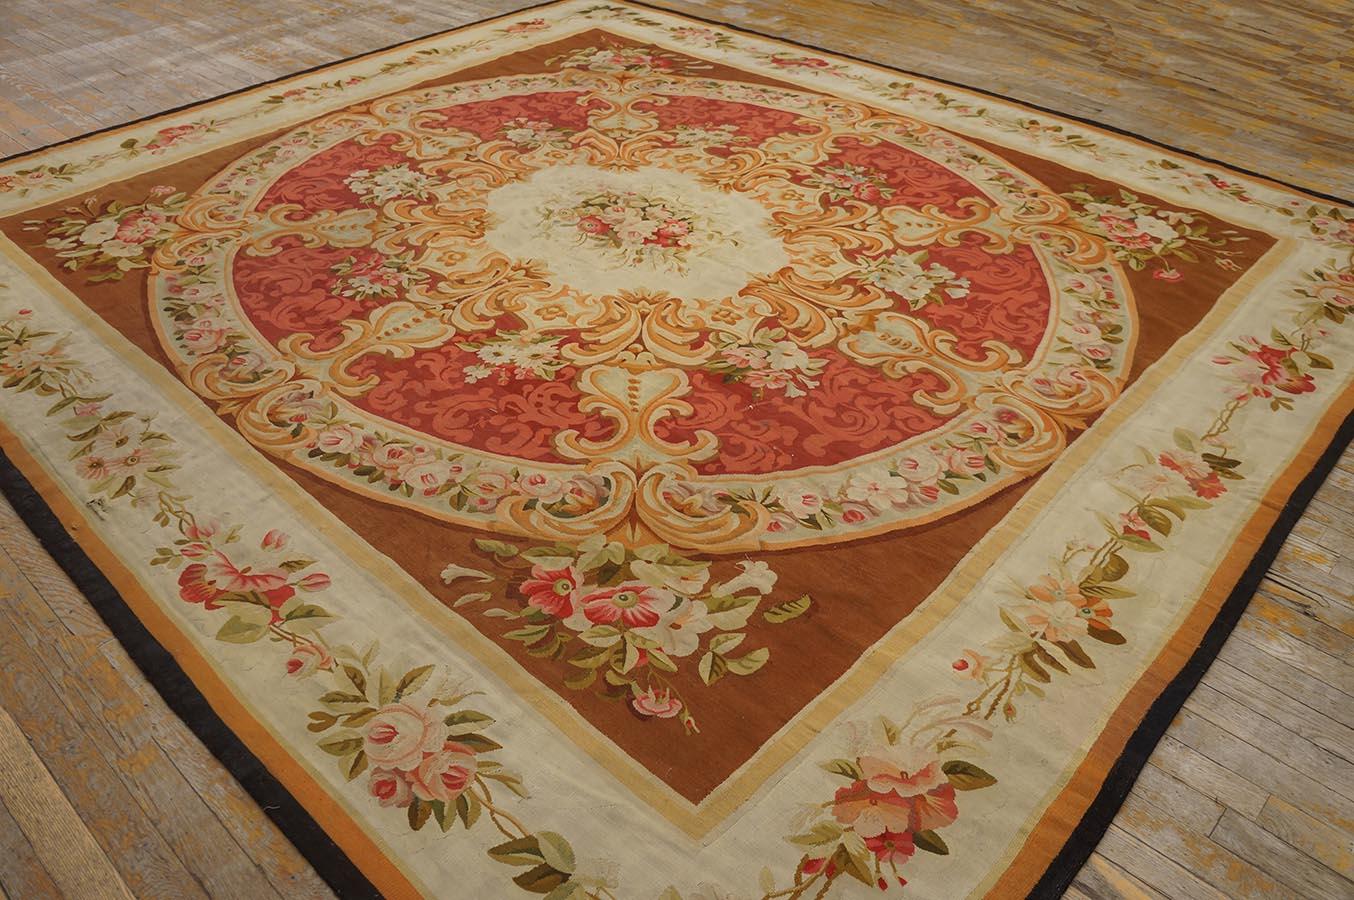 French Aubusson Carpet Circa 1870s (9'2